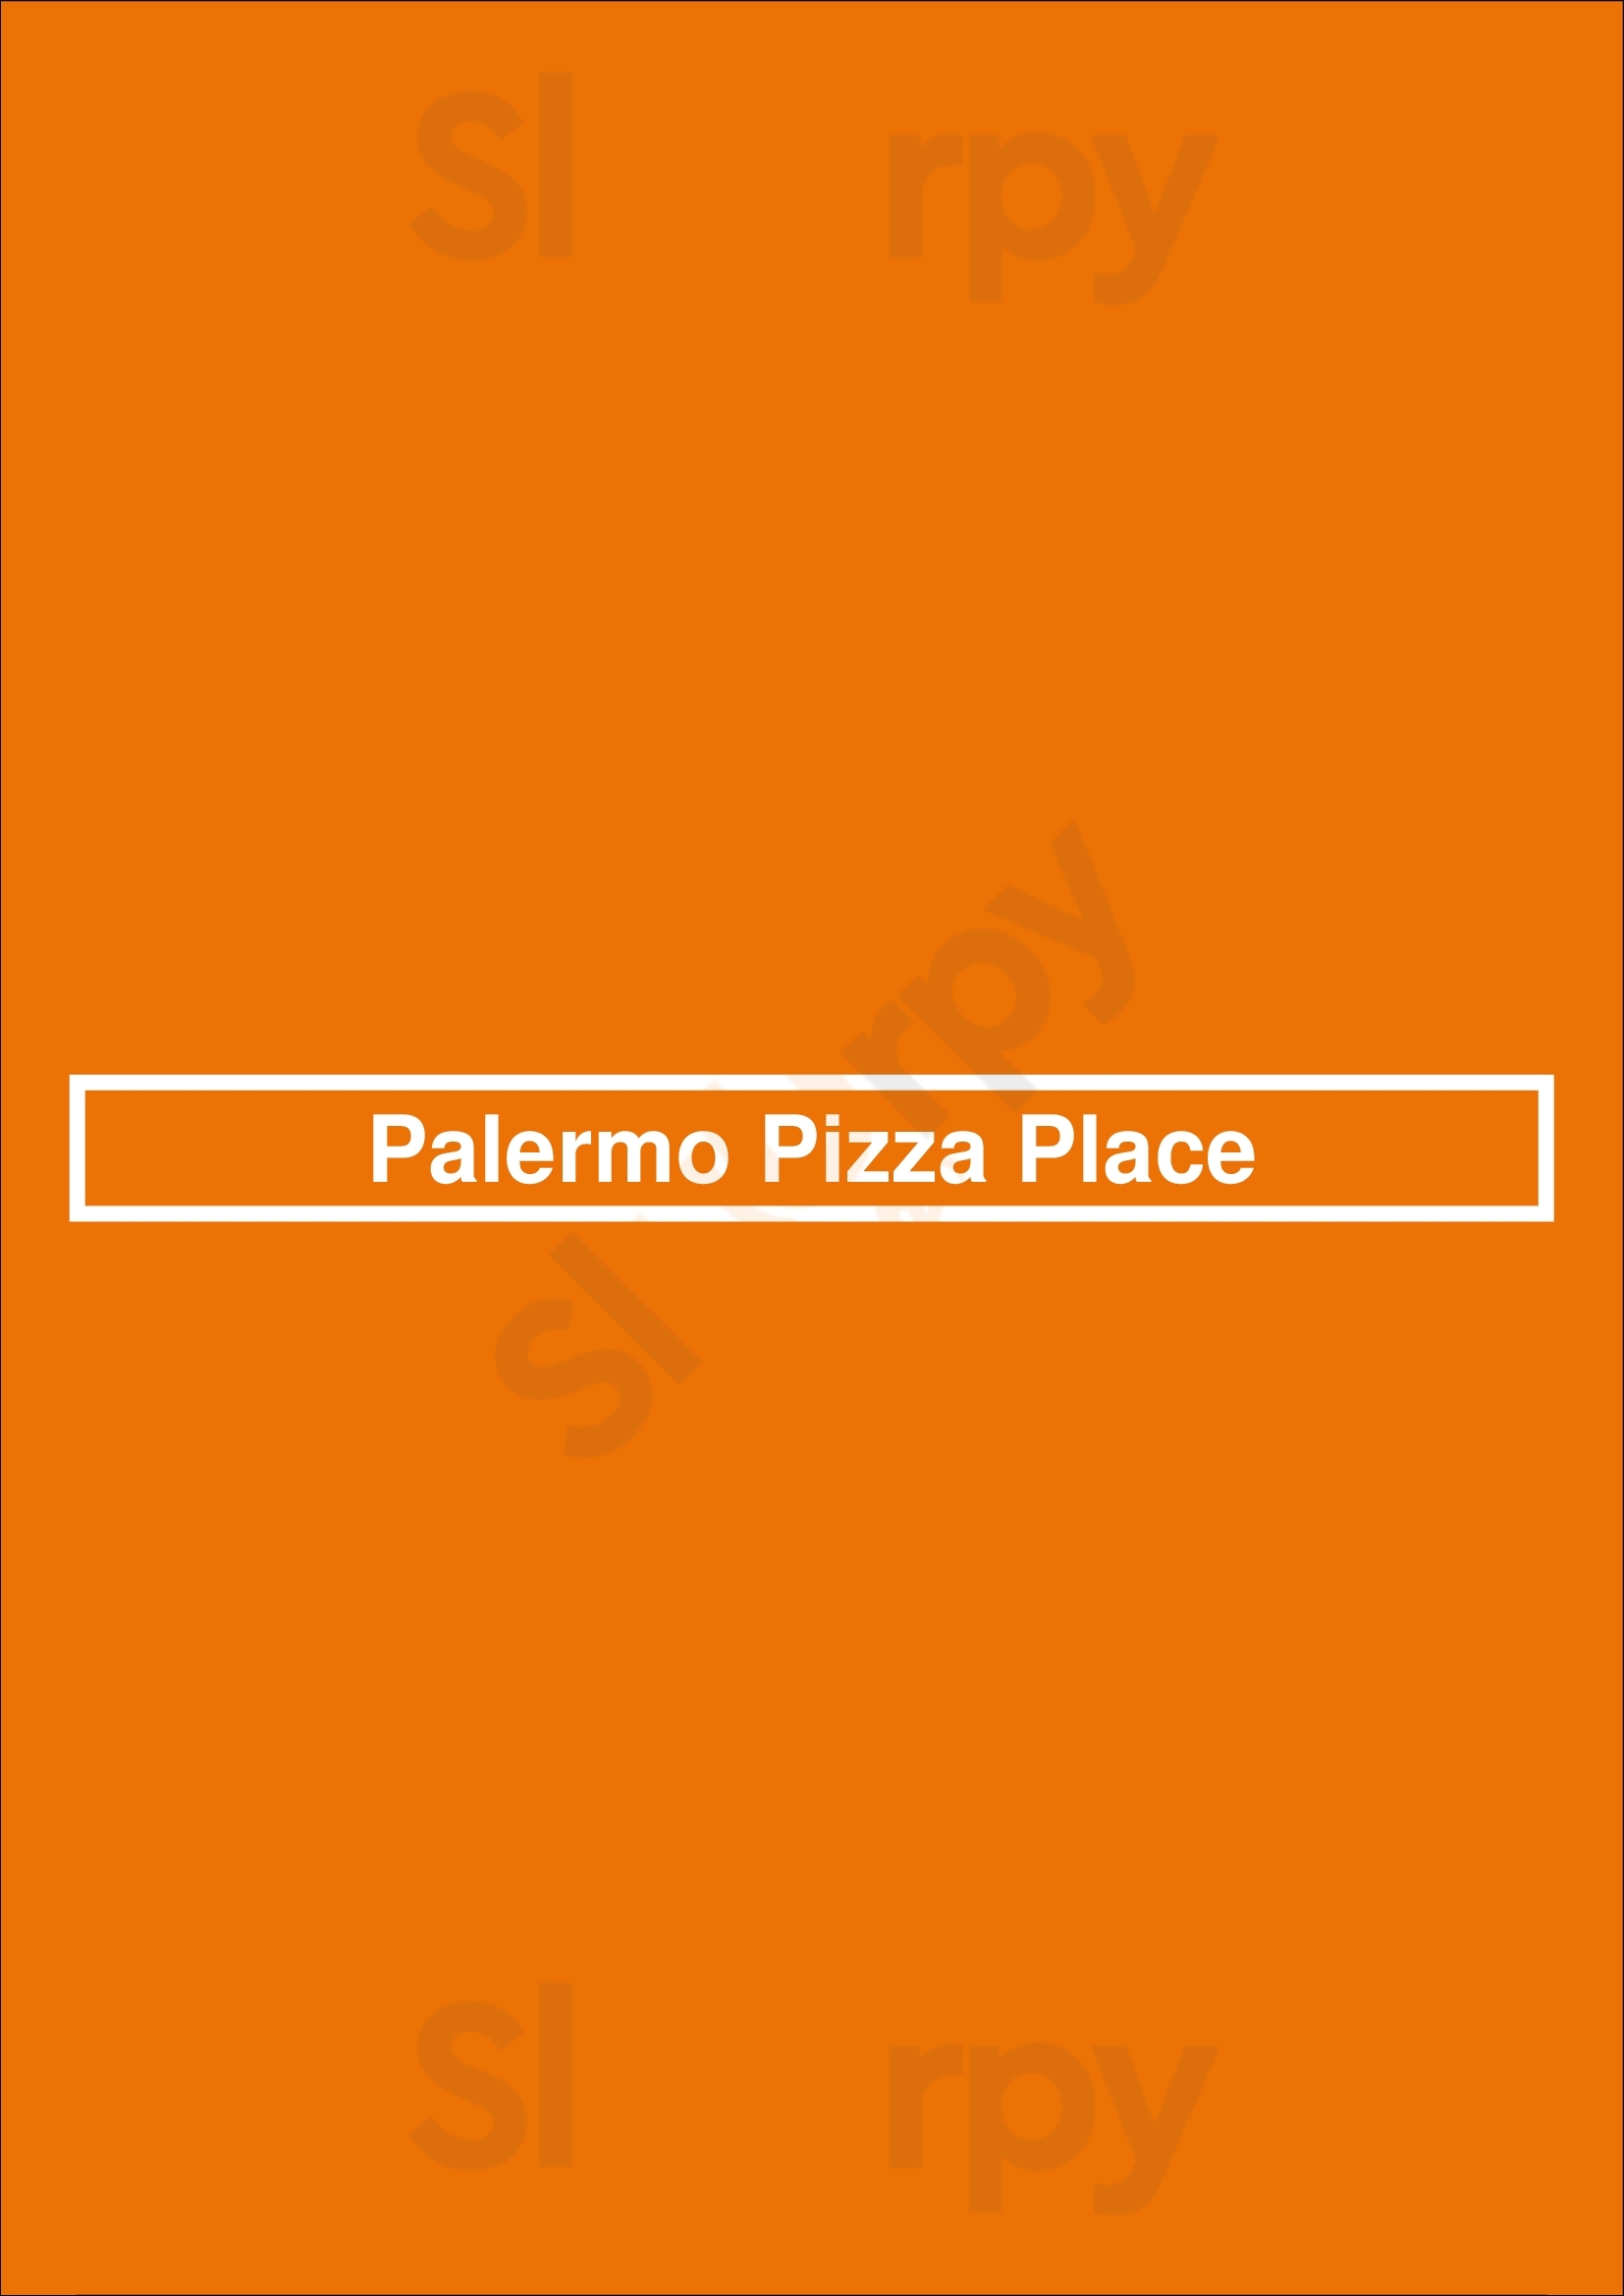 Palermo Pizza Place Grand Rapids Menu - 1